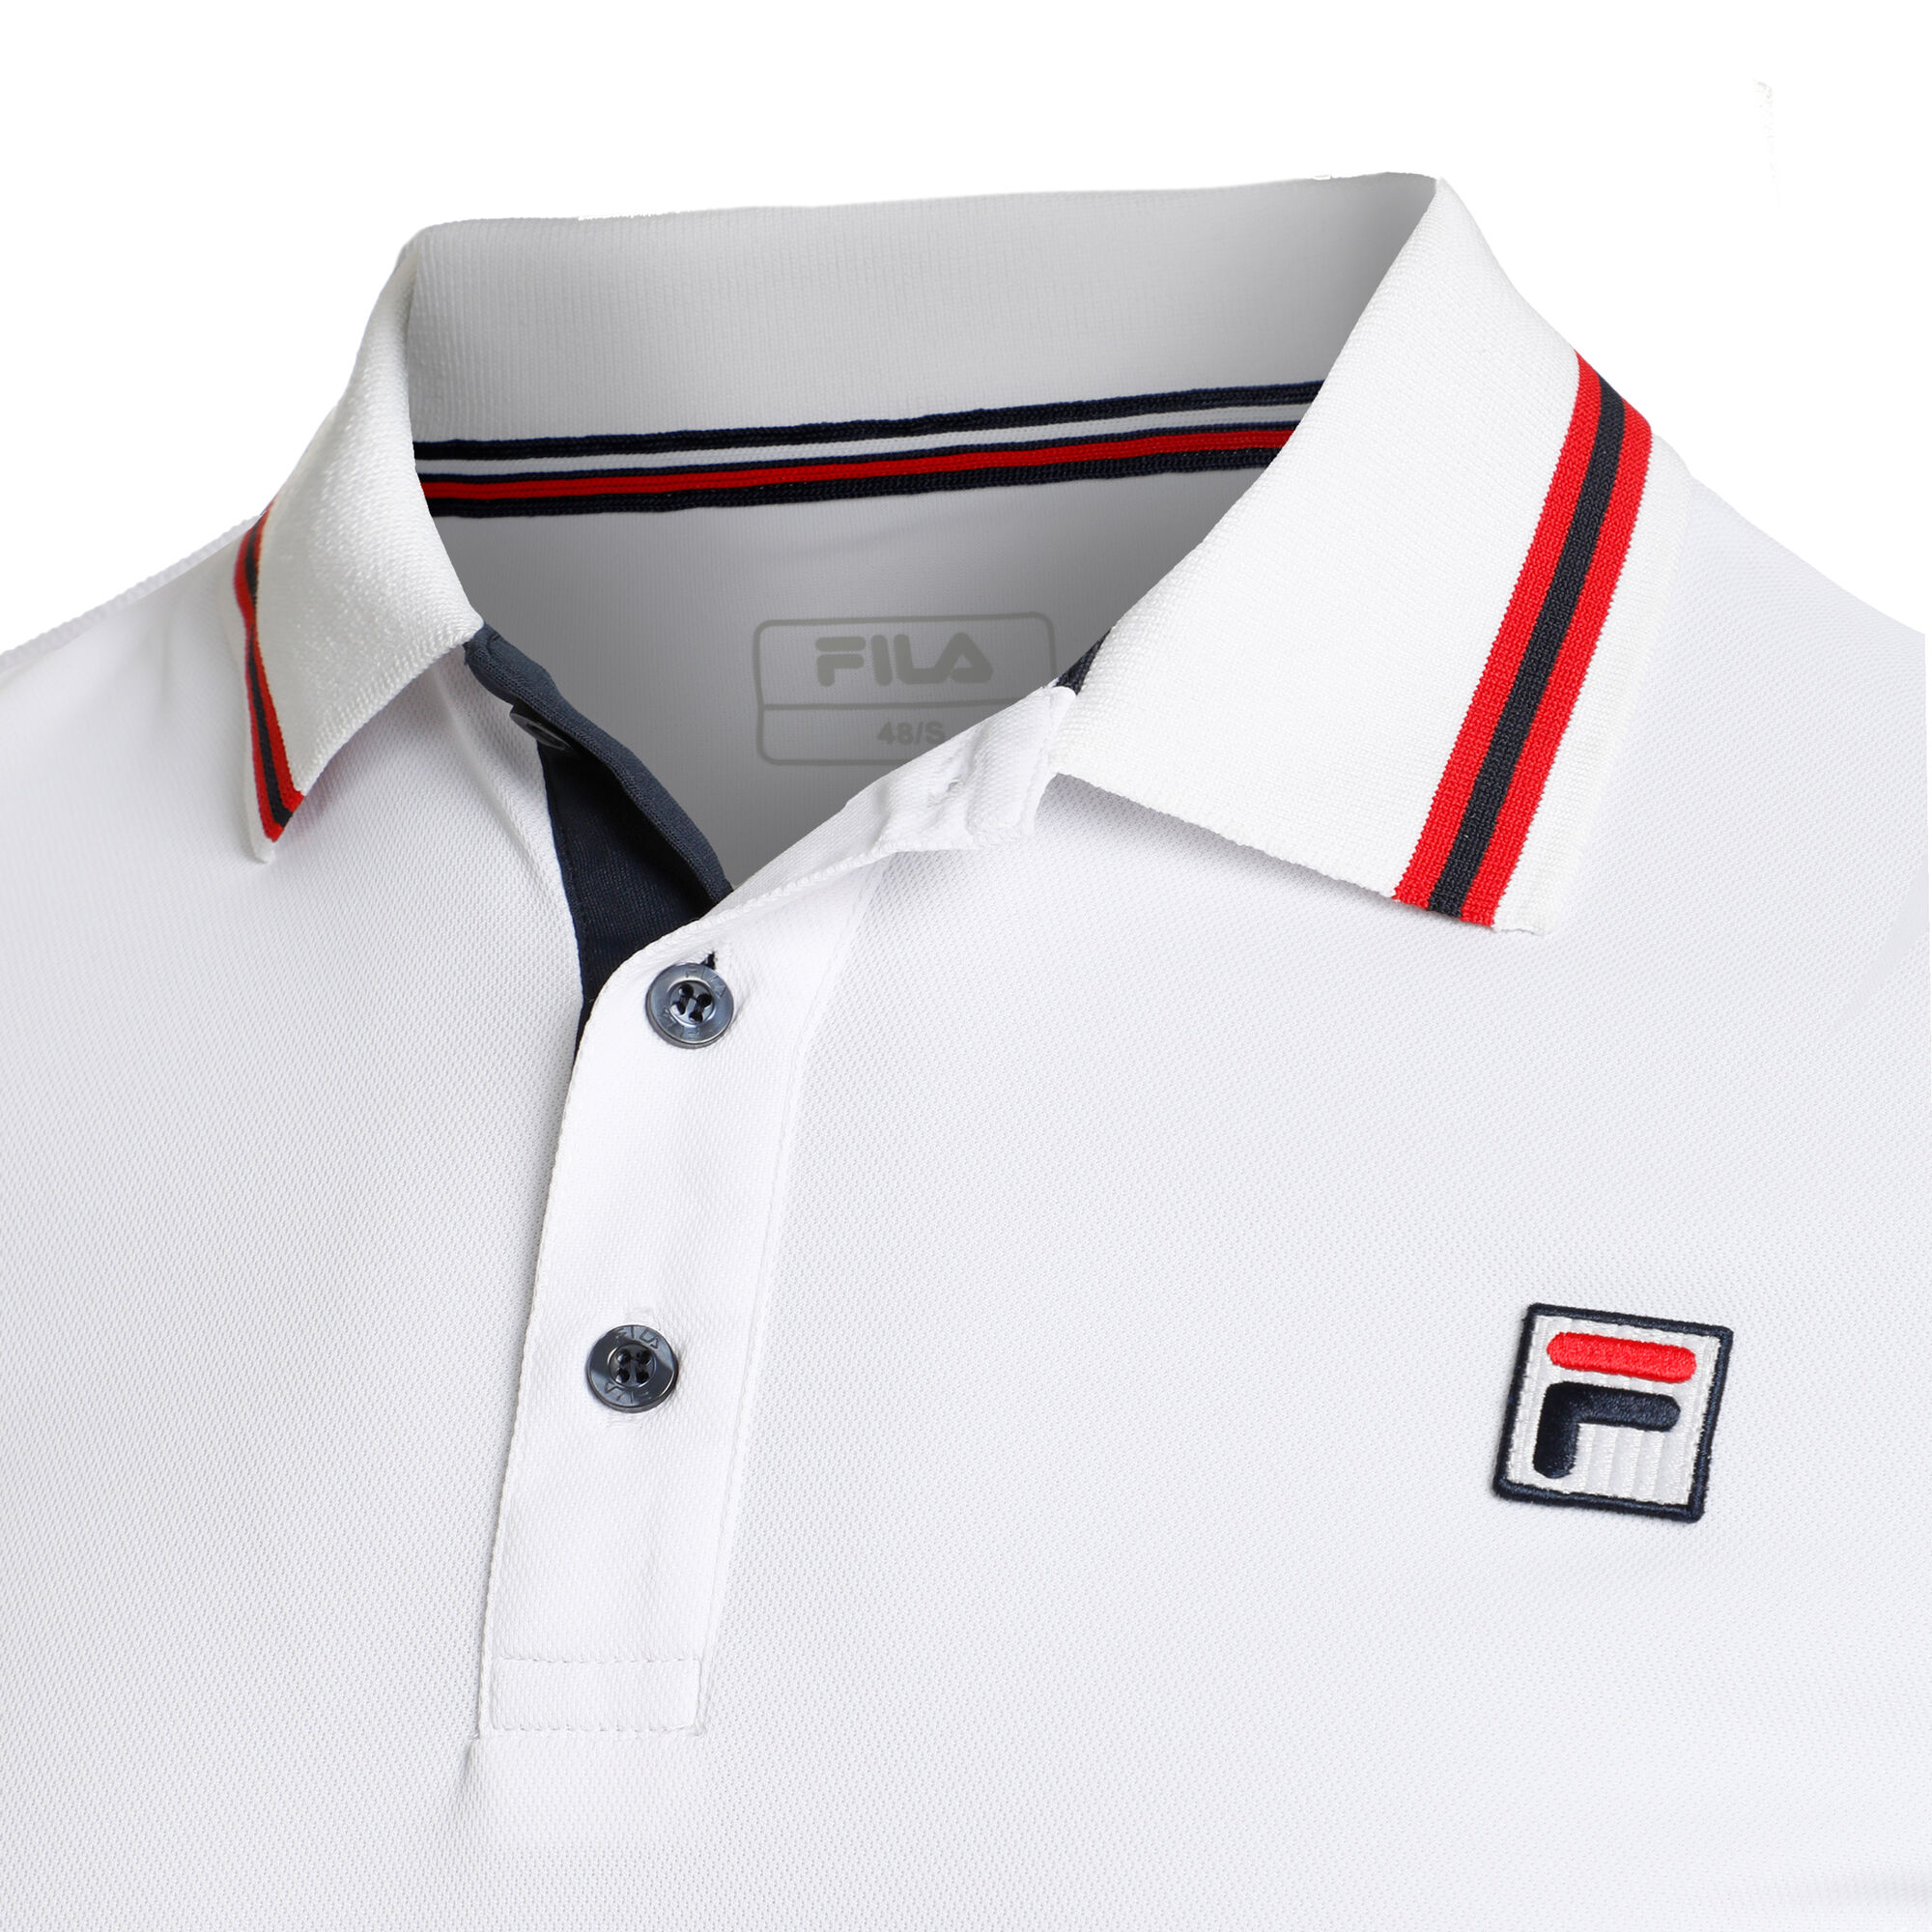 buy Core Piro Polo Men - White, Red online | Tennis-Point